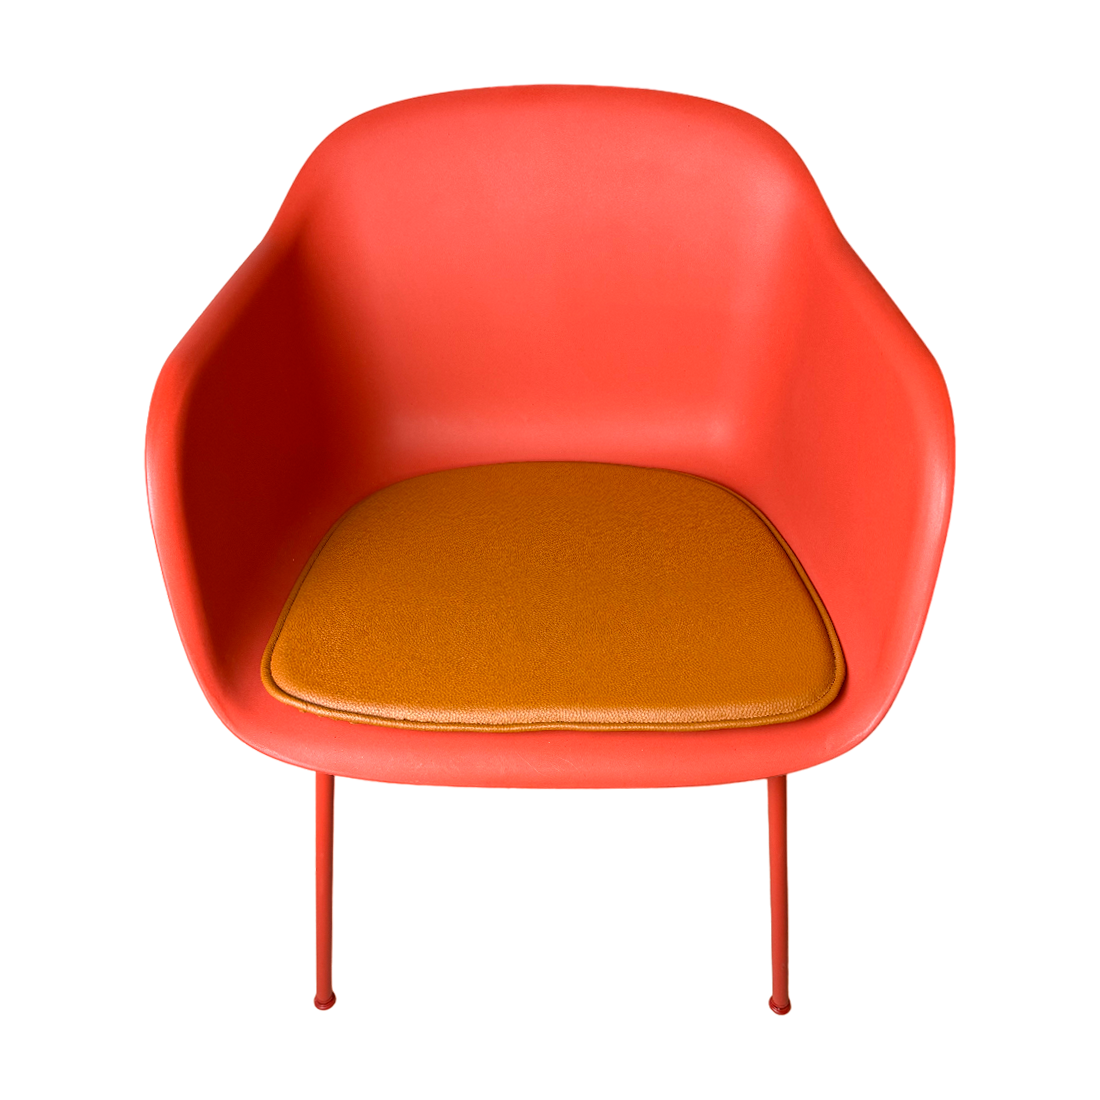 Luxury cognac leather cushion to the muuto fiber armchair chair